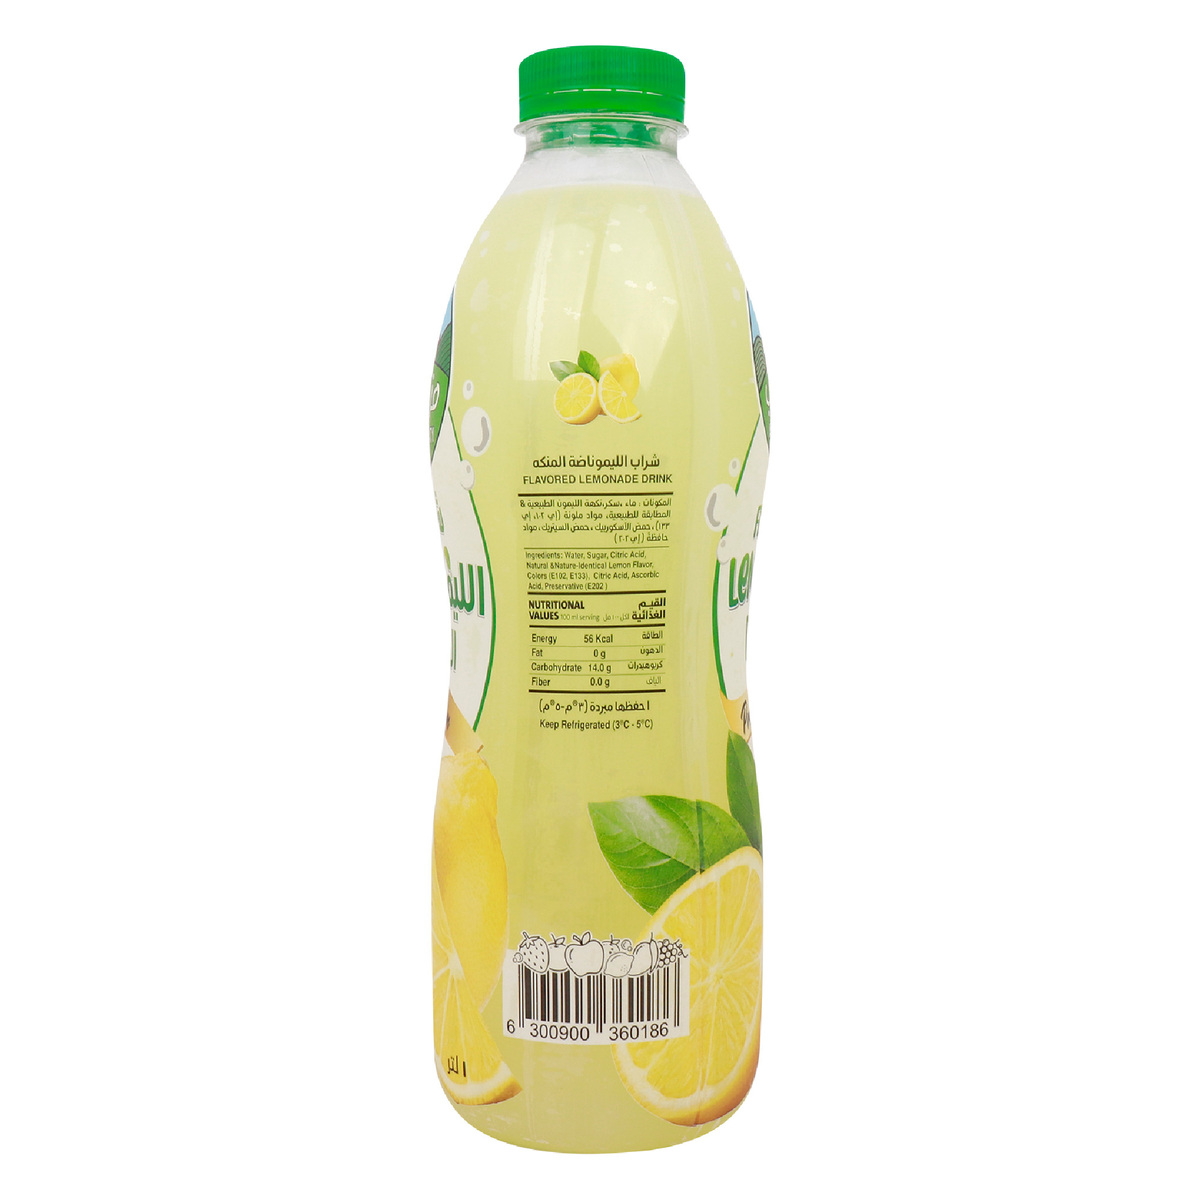 Mazzraty Lemonade Juice 1Litre